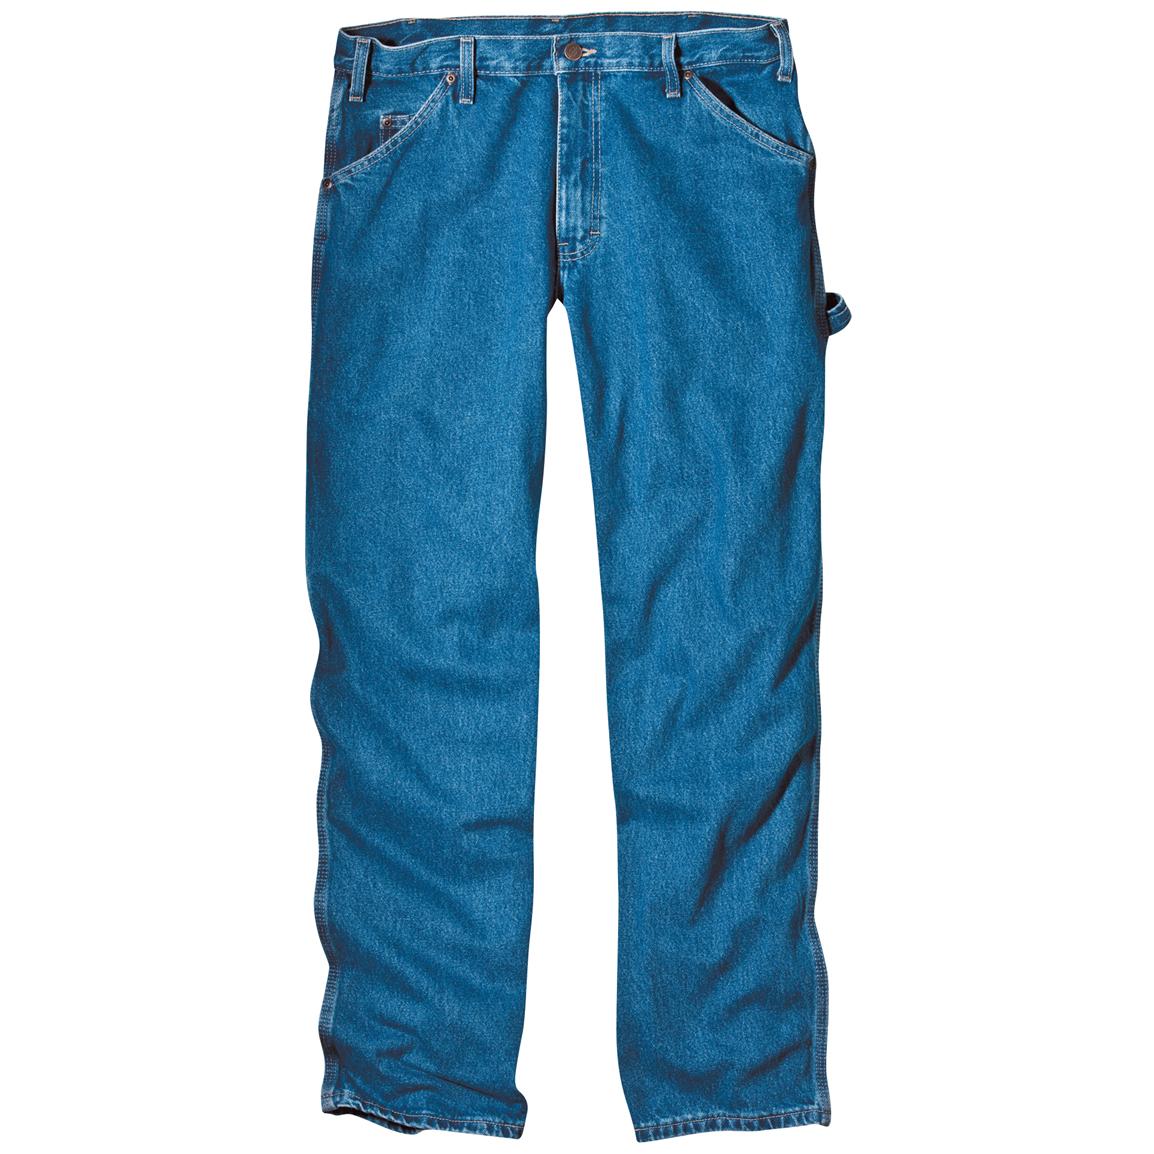 Folded Jeans Clip Art Jeans C